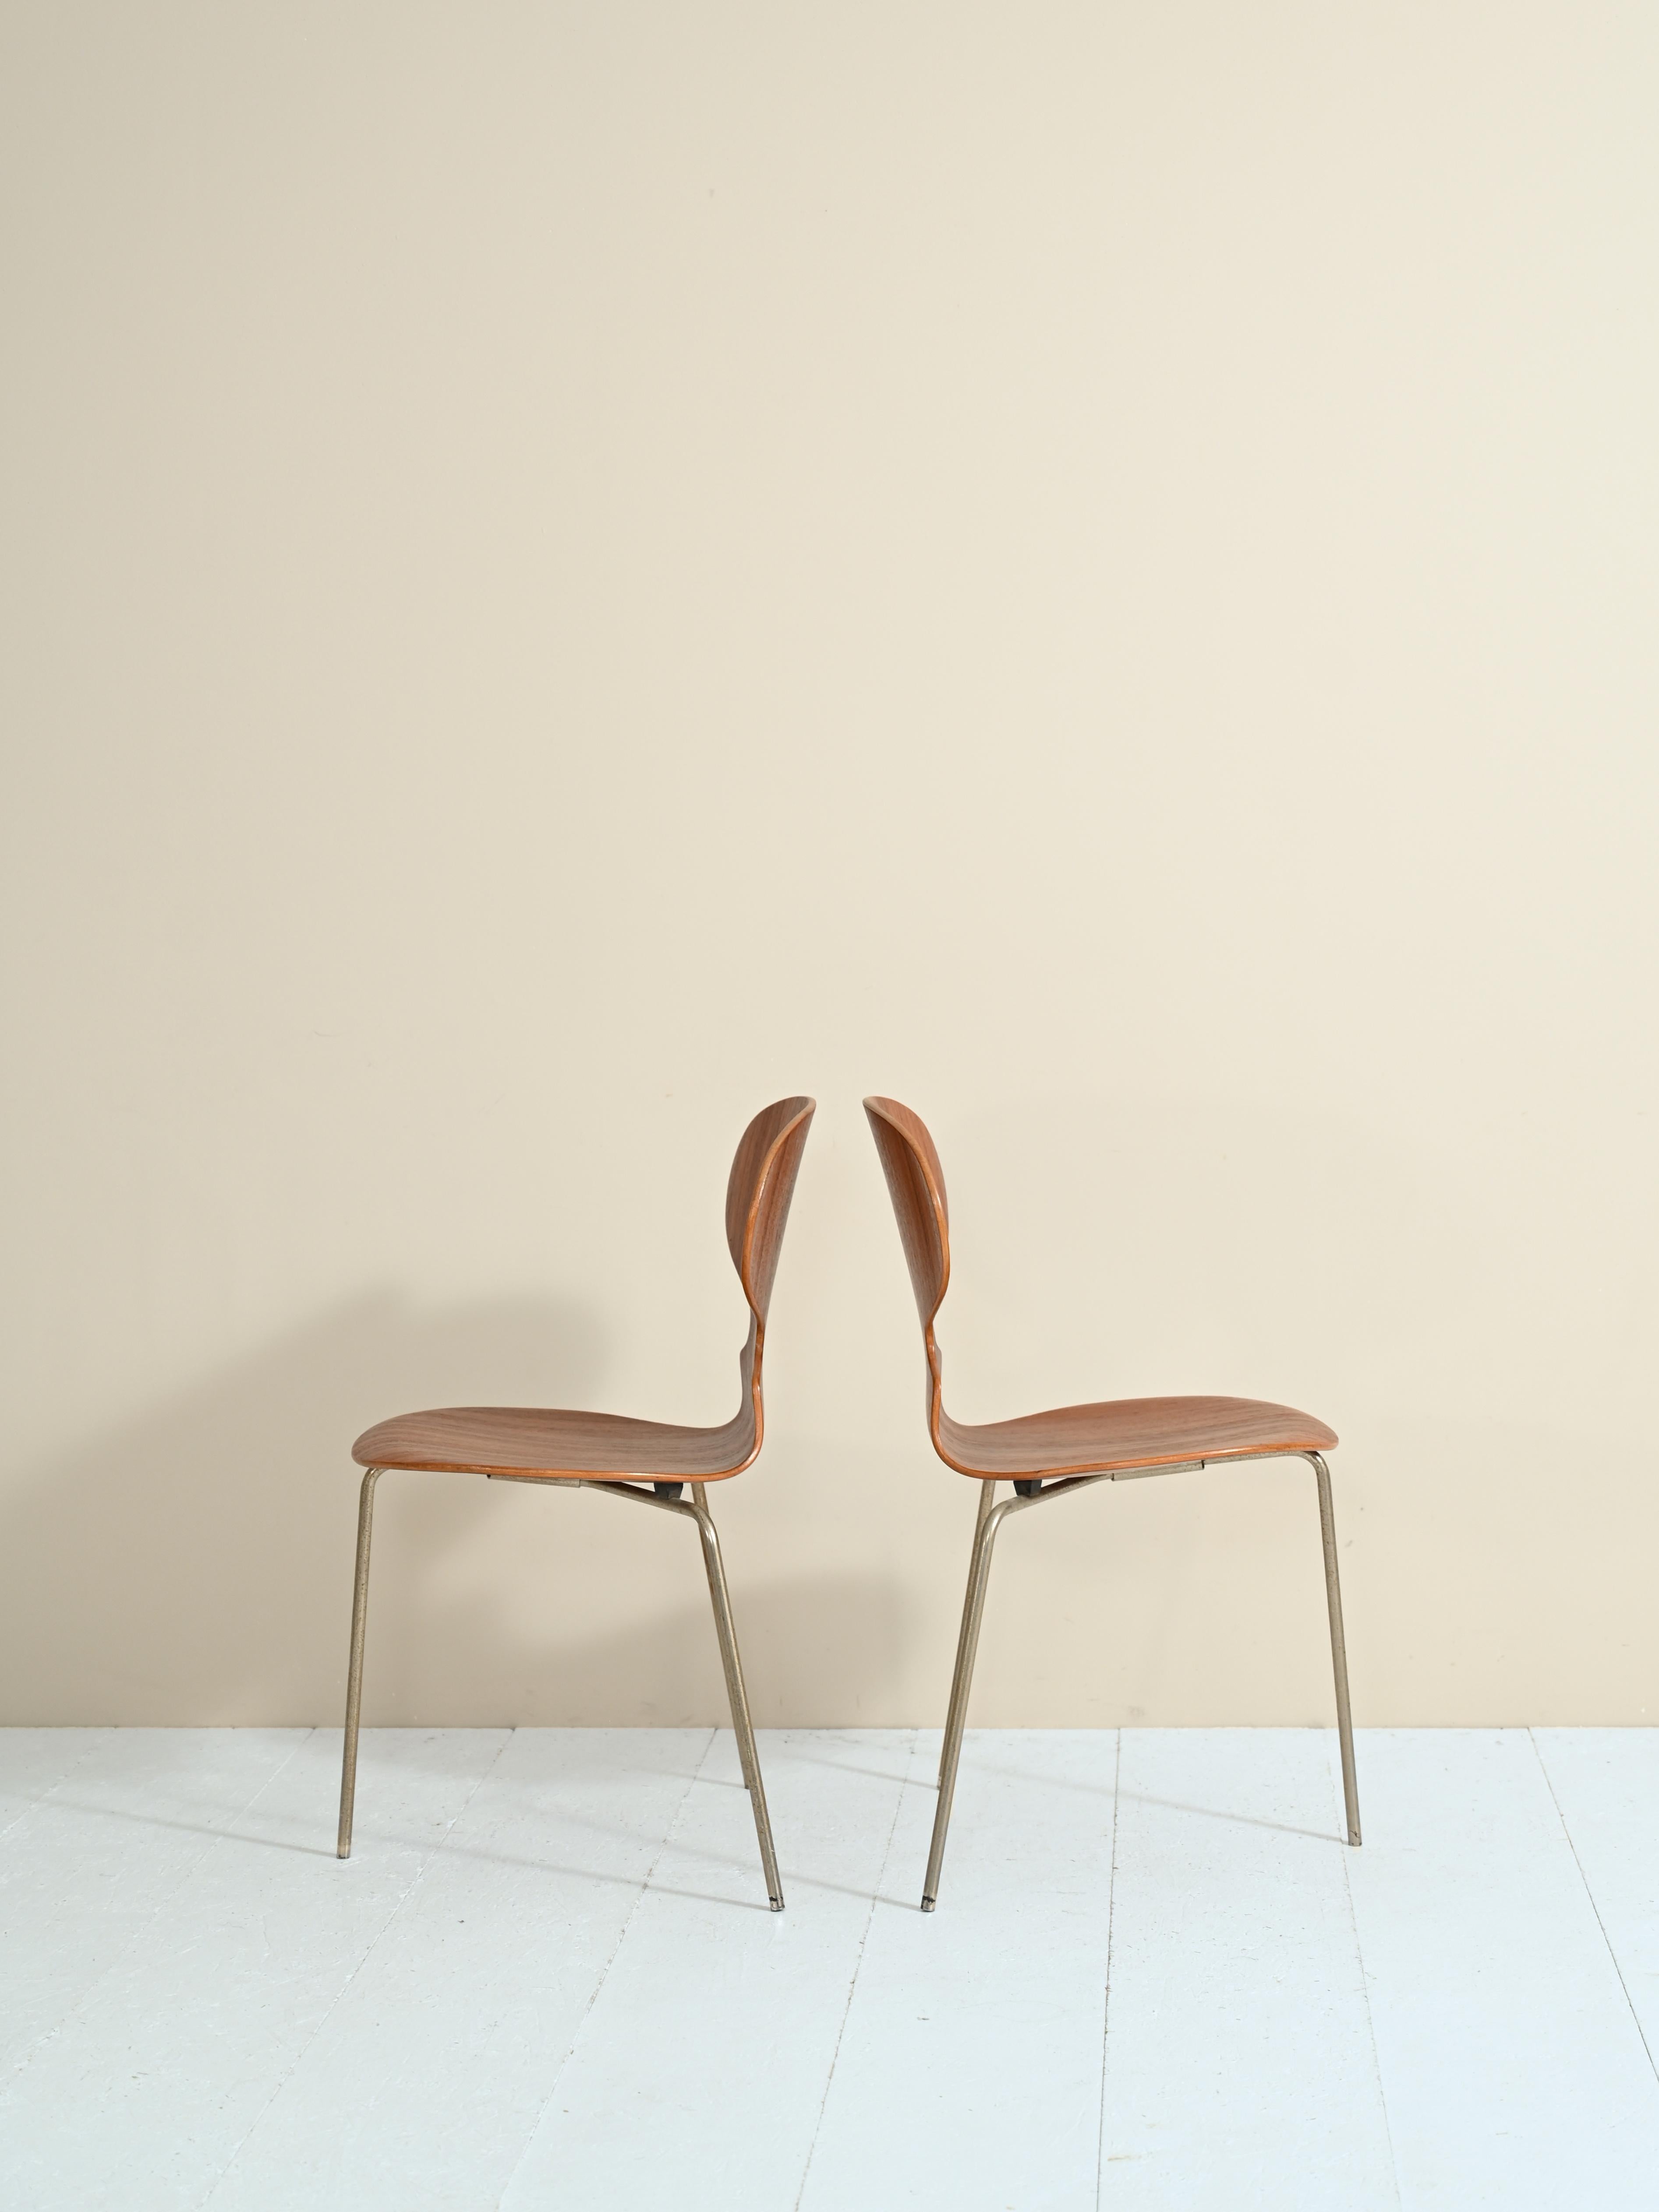 Scandinavian 'Ant Chair' Chairs Model 3101 by Arne Jacobsen for Fritz Hansen